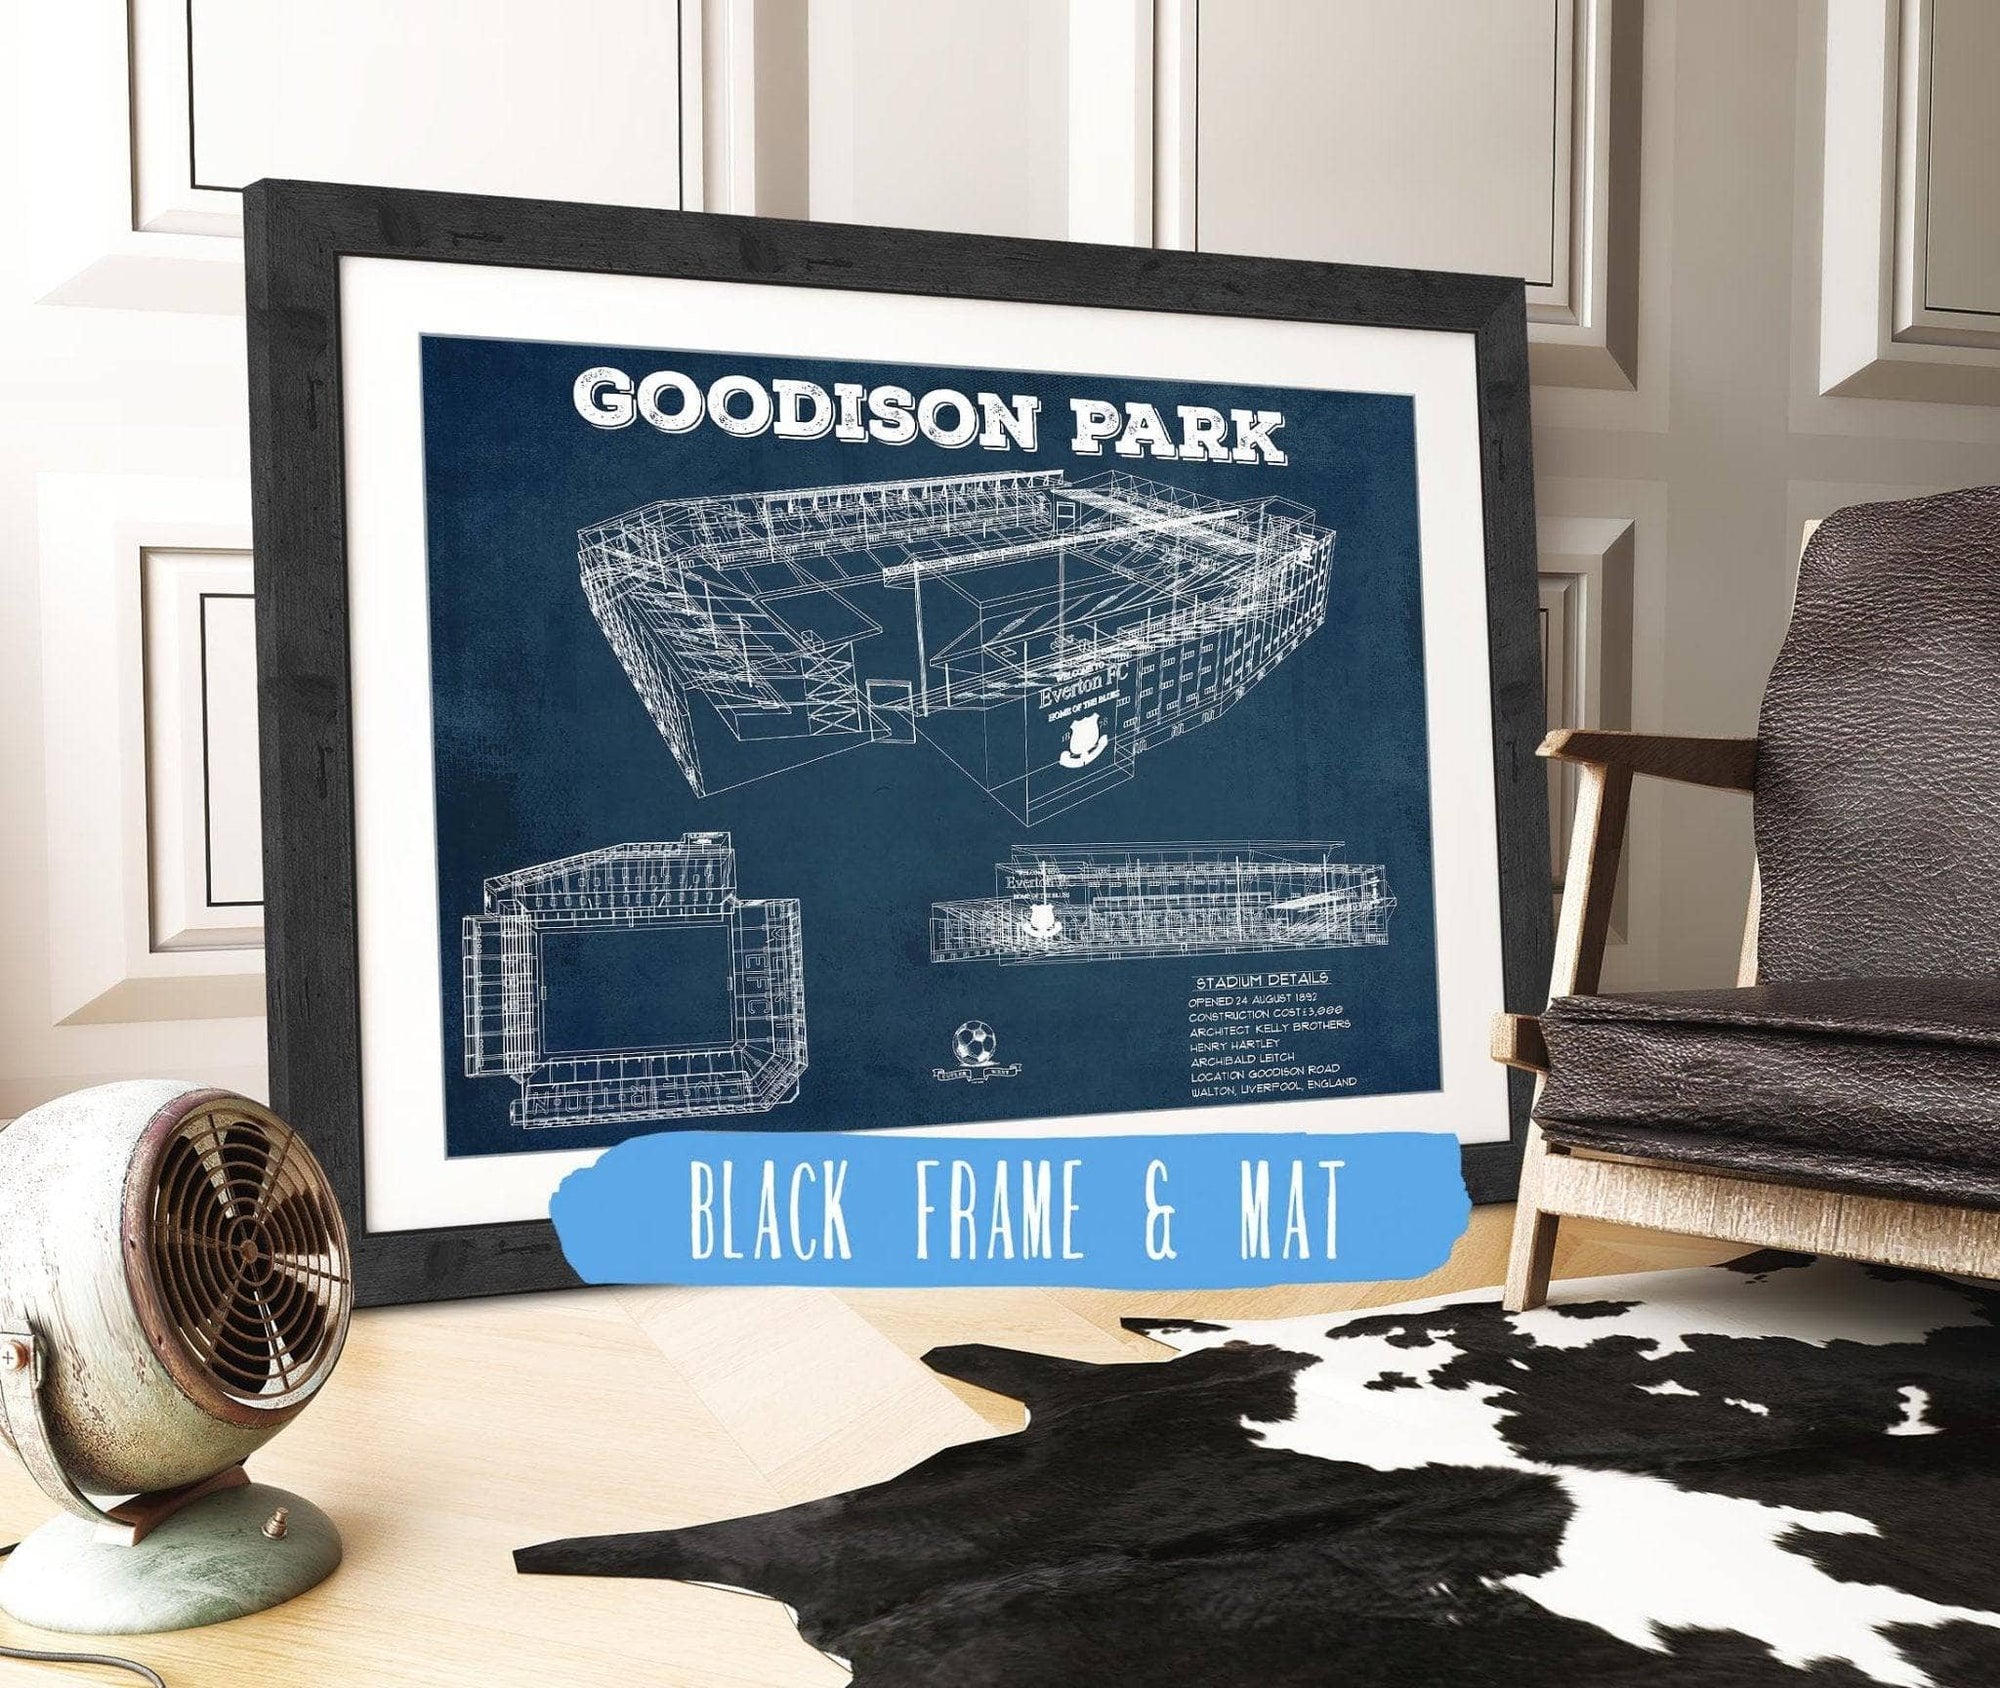 Cutler West Soccer Collection 14" x 11" / Black Frame & Mat Everton Football Club - Vintage Goodison Park Soccer Print 722908504-TOP